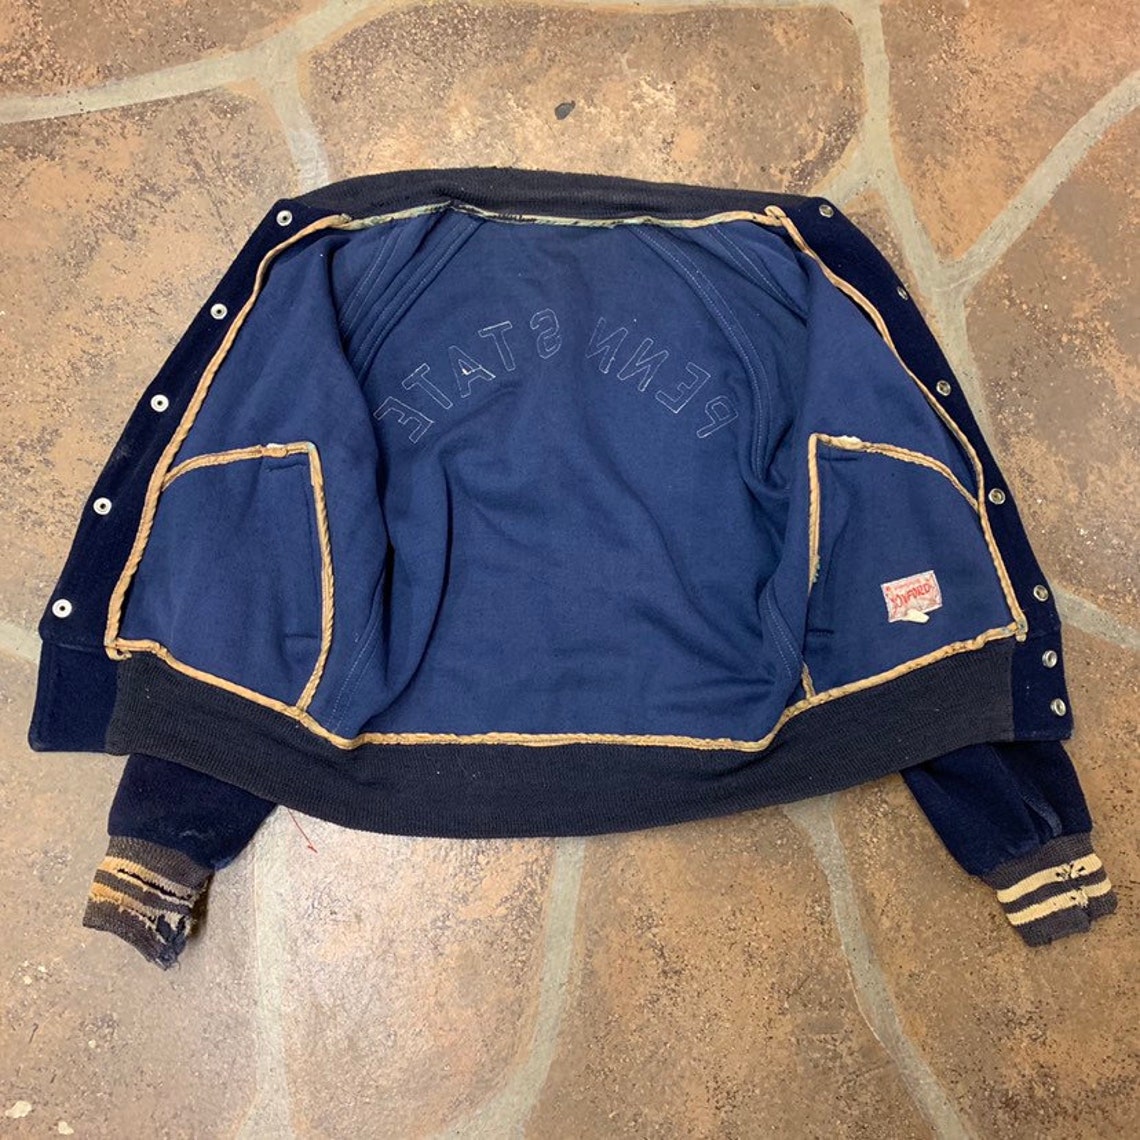 Vintage 40s 50s Penn State letterman jacket 1940s 1950s | Etsy